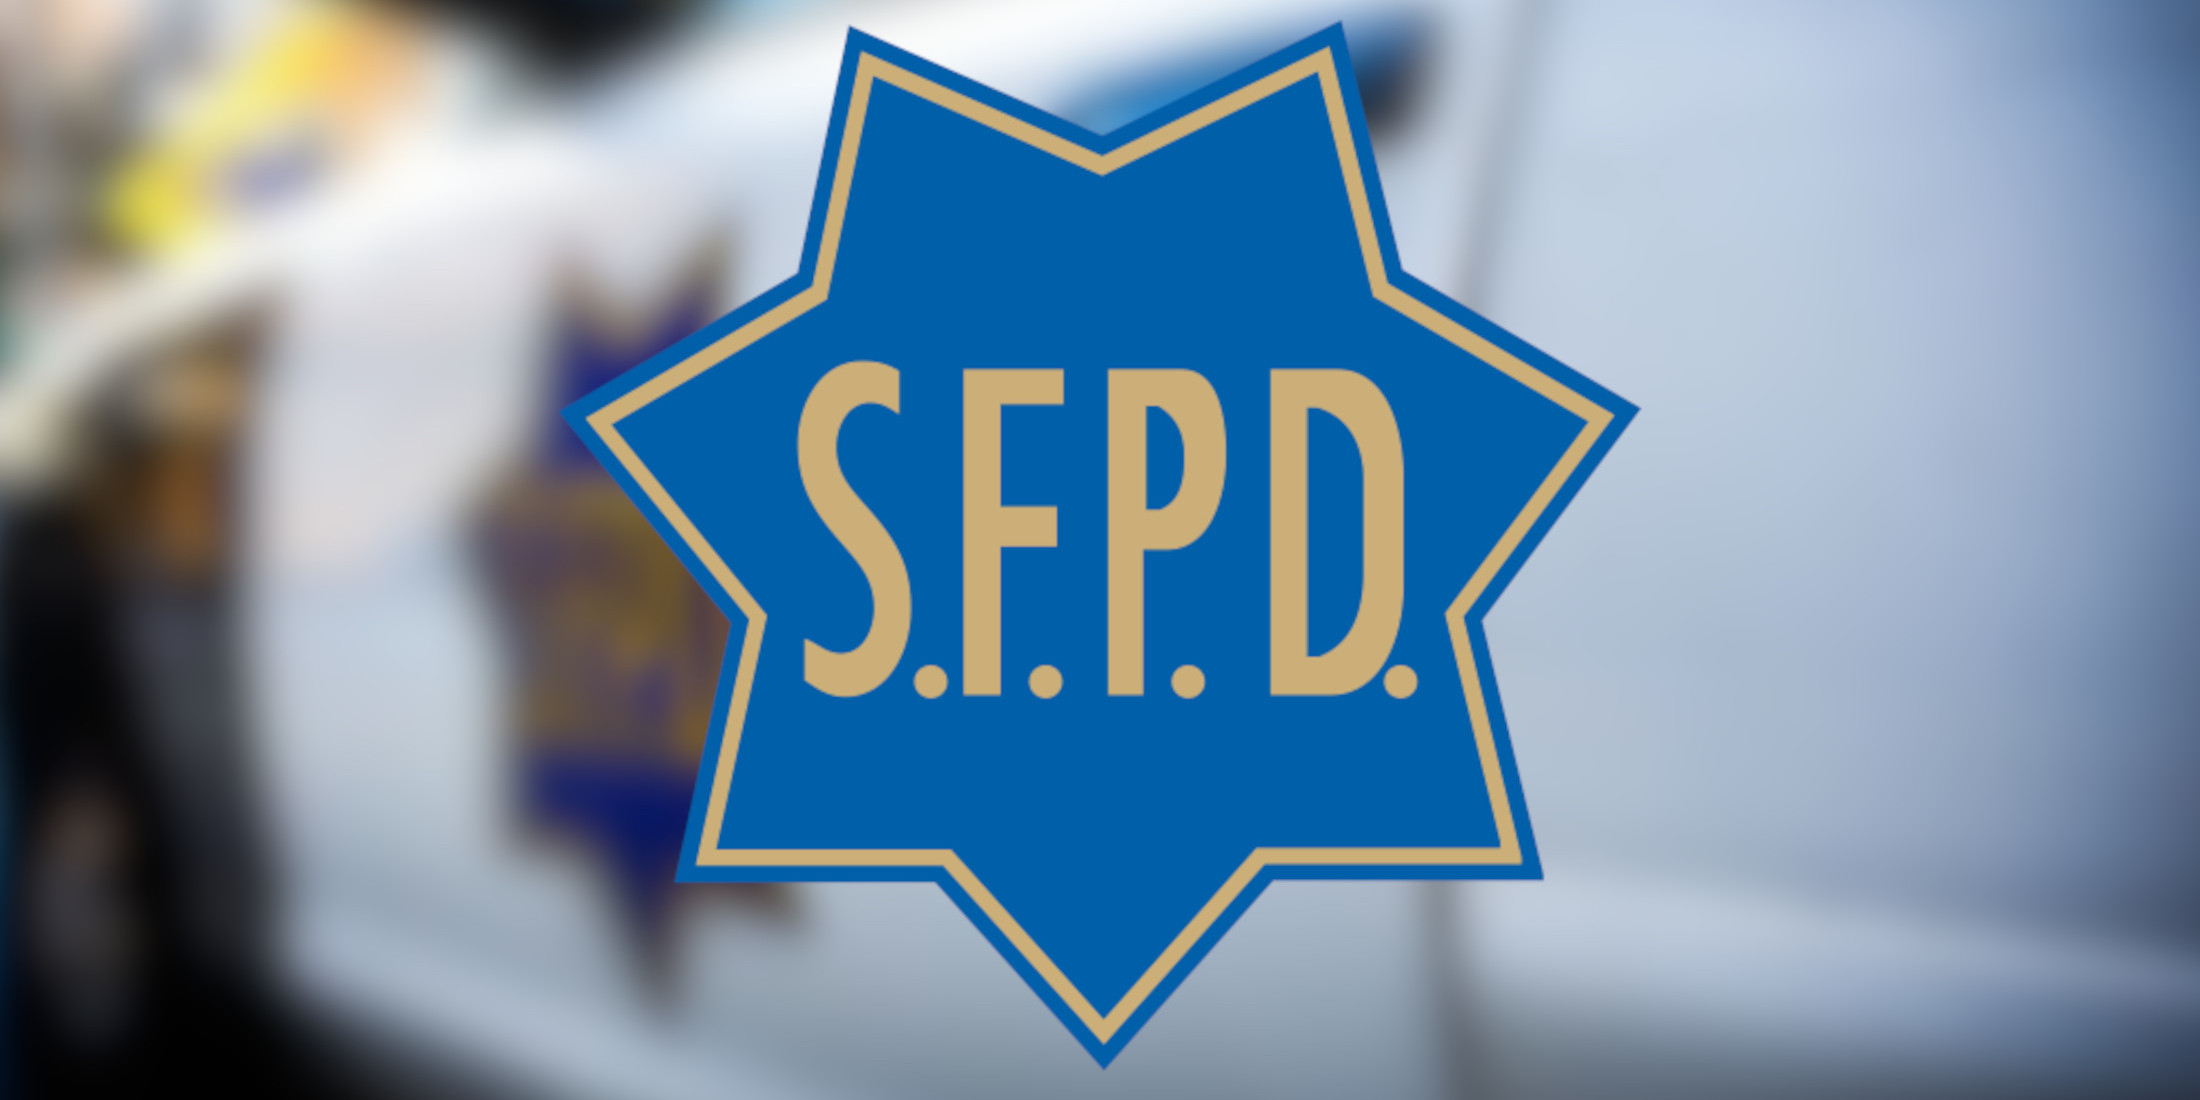 SFPD Star Patch logo.